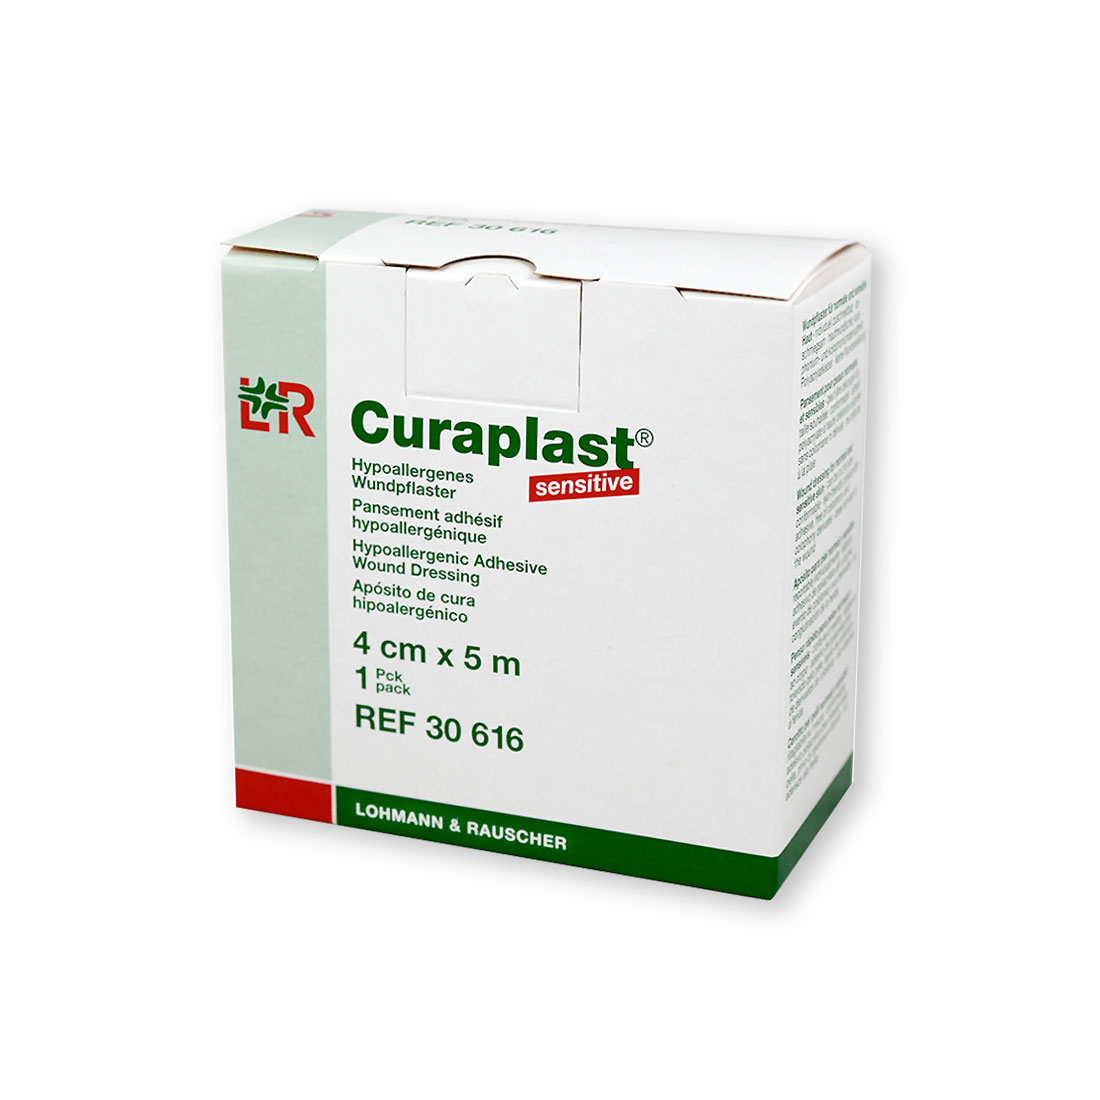 Curaplast® sensitive Wundschnellverband, 5-m-Rolle